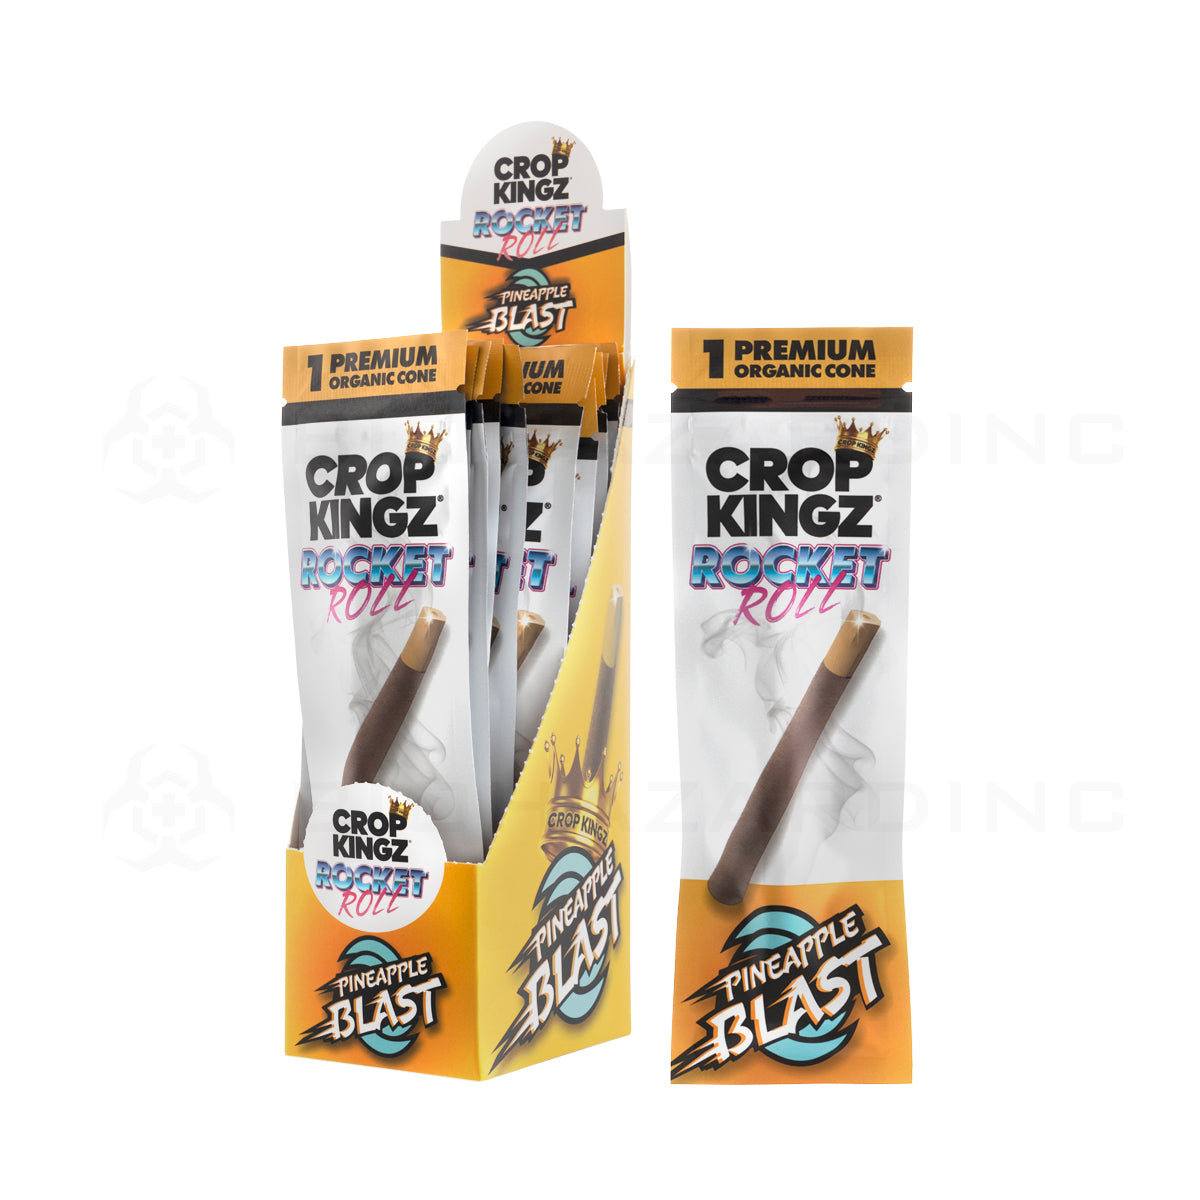 Crop Kingz | Rocket Roll Organic Hemp Wrap | Pineapple Blast - 15 Count